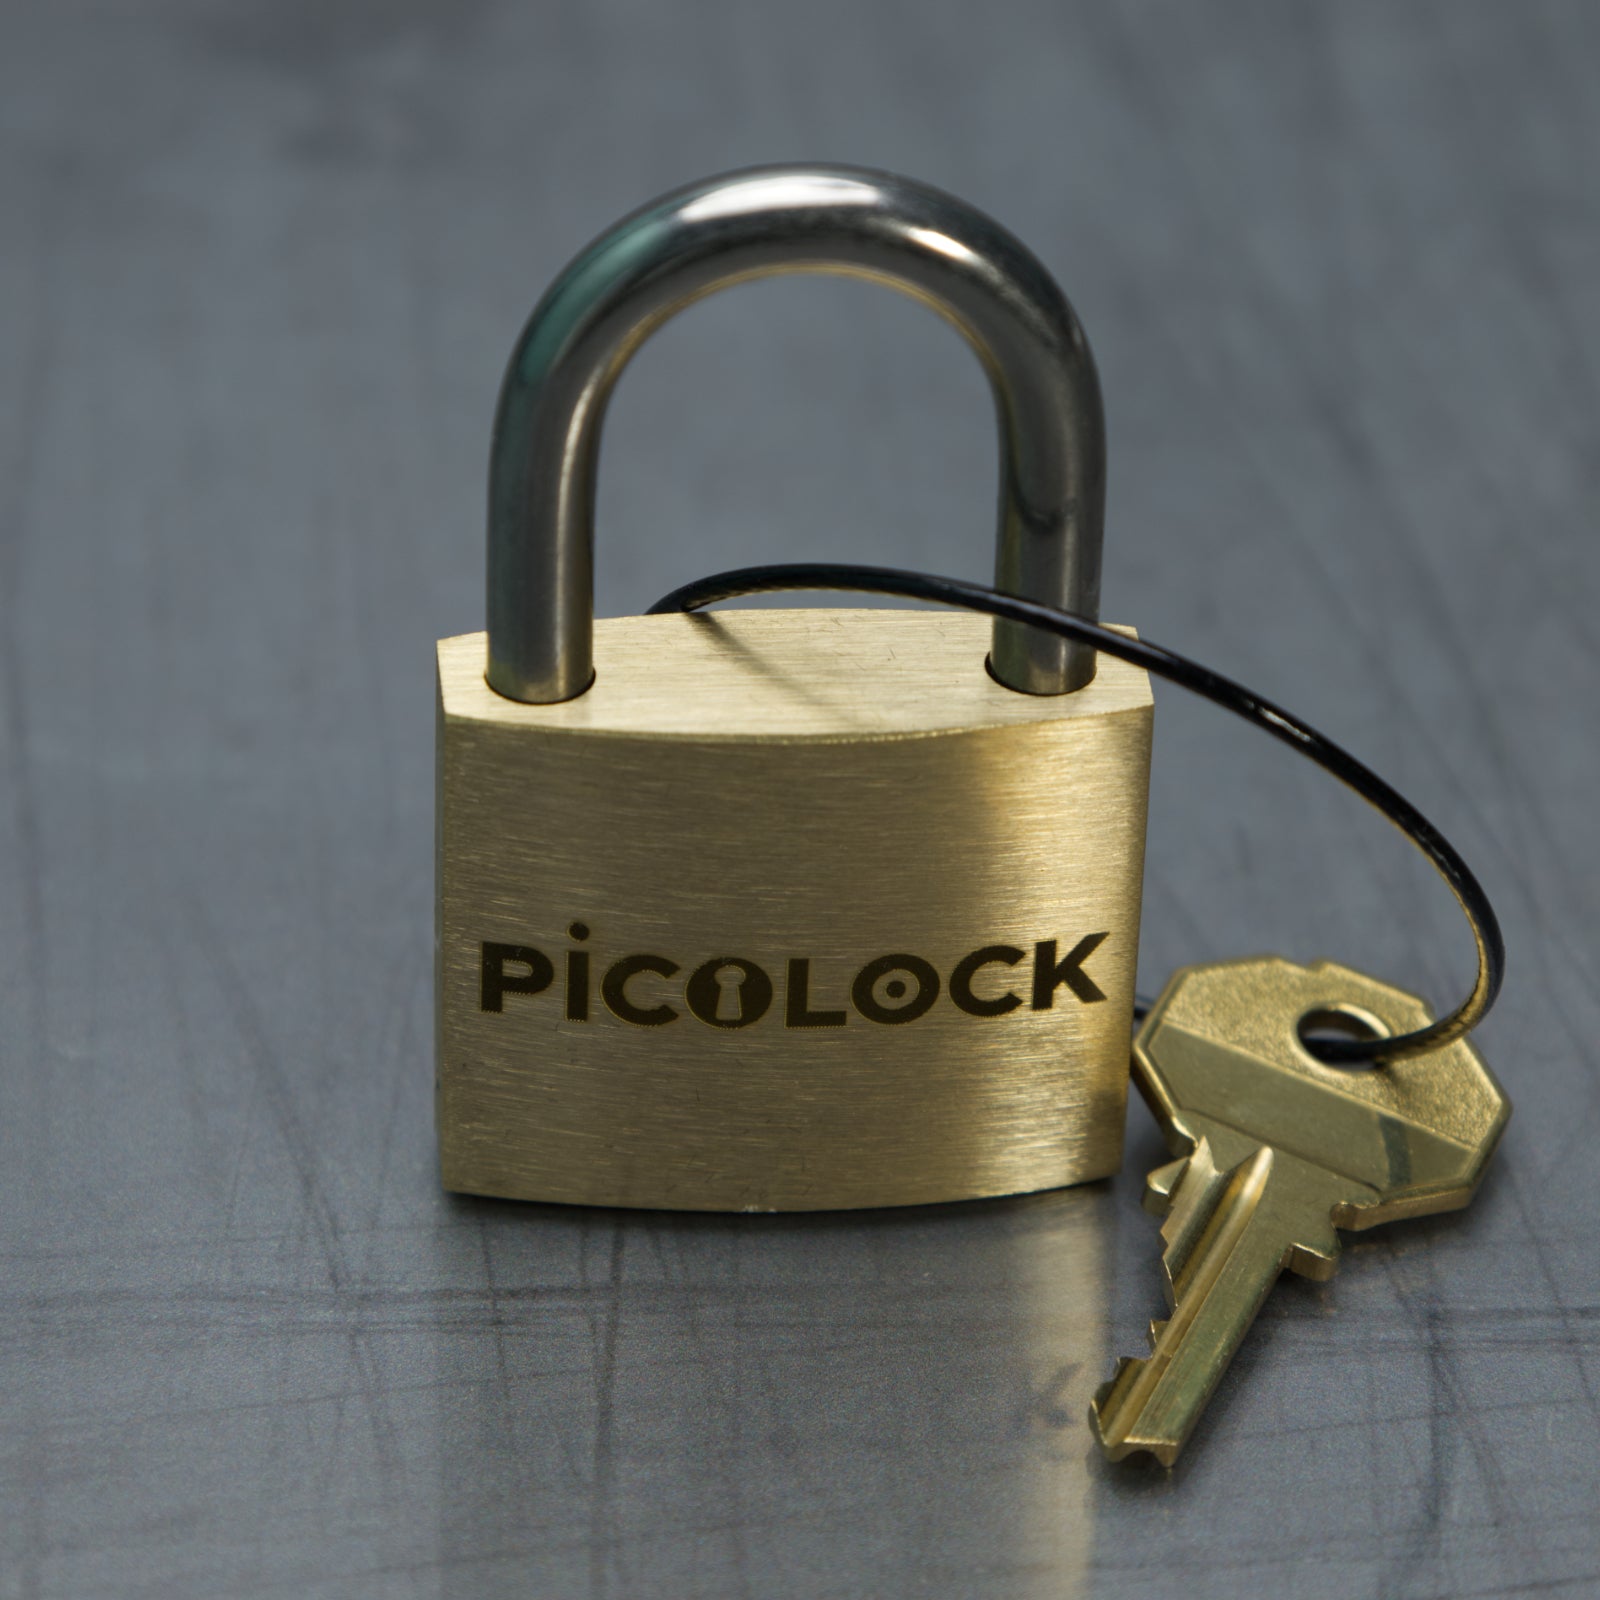 PicoLock- Level 7 - Puzzlocks - Boaz Feldman